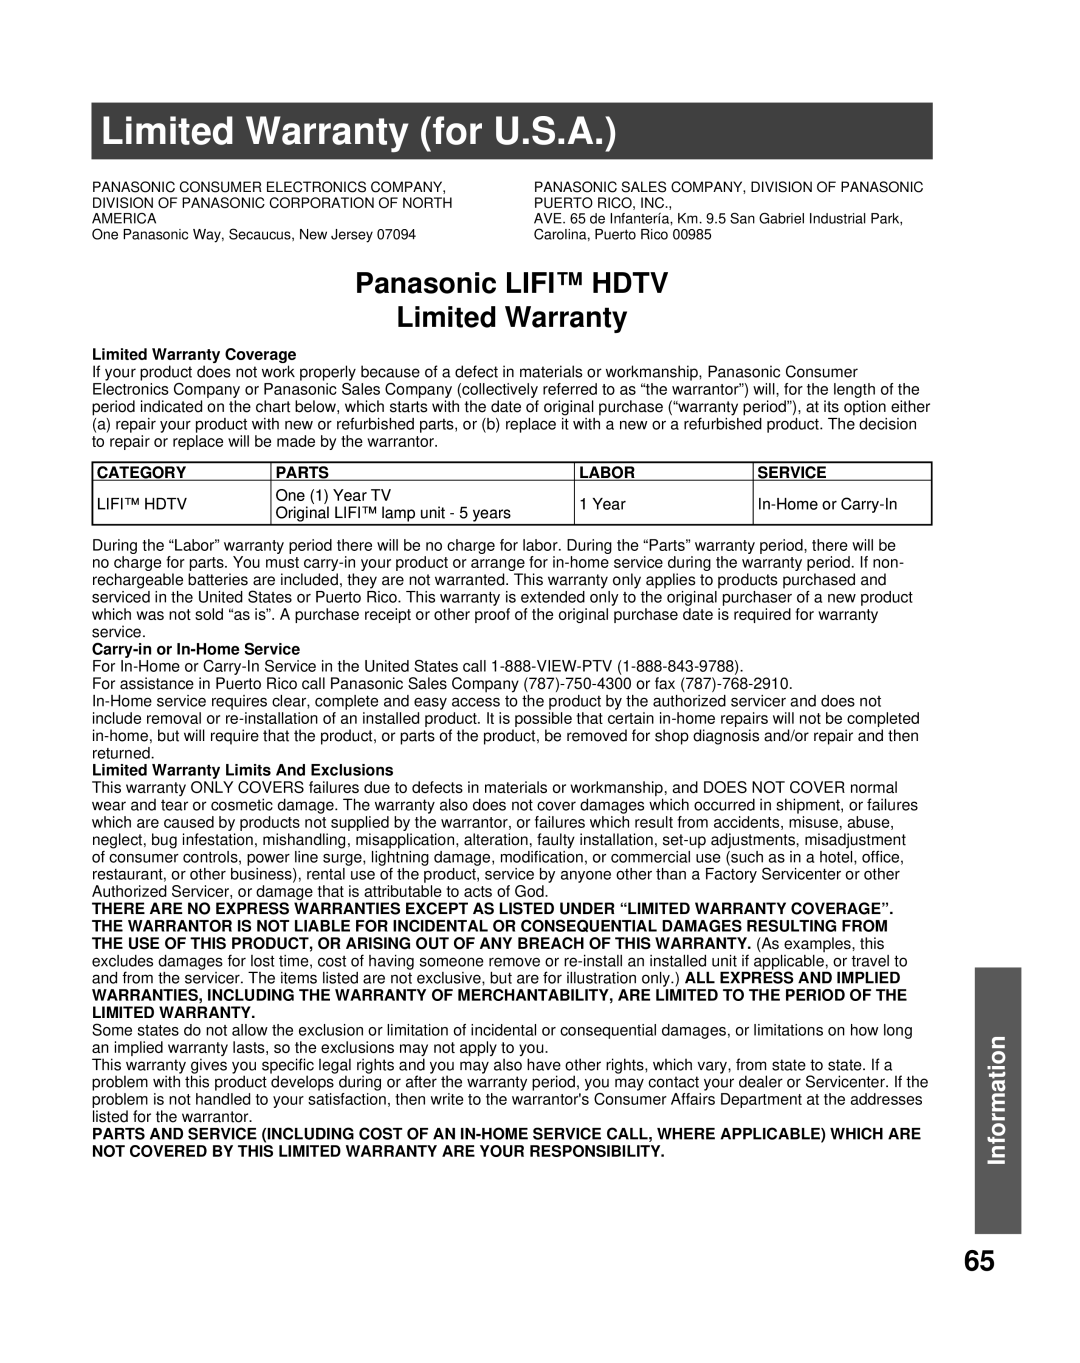 Panasonic PT-50LCZ70 Limited Warranty for U.S.A, Panasonic LIFI HDTV Limited Warranty, Information, Category, Parts, Labor 